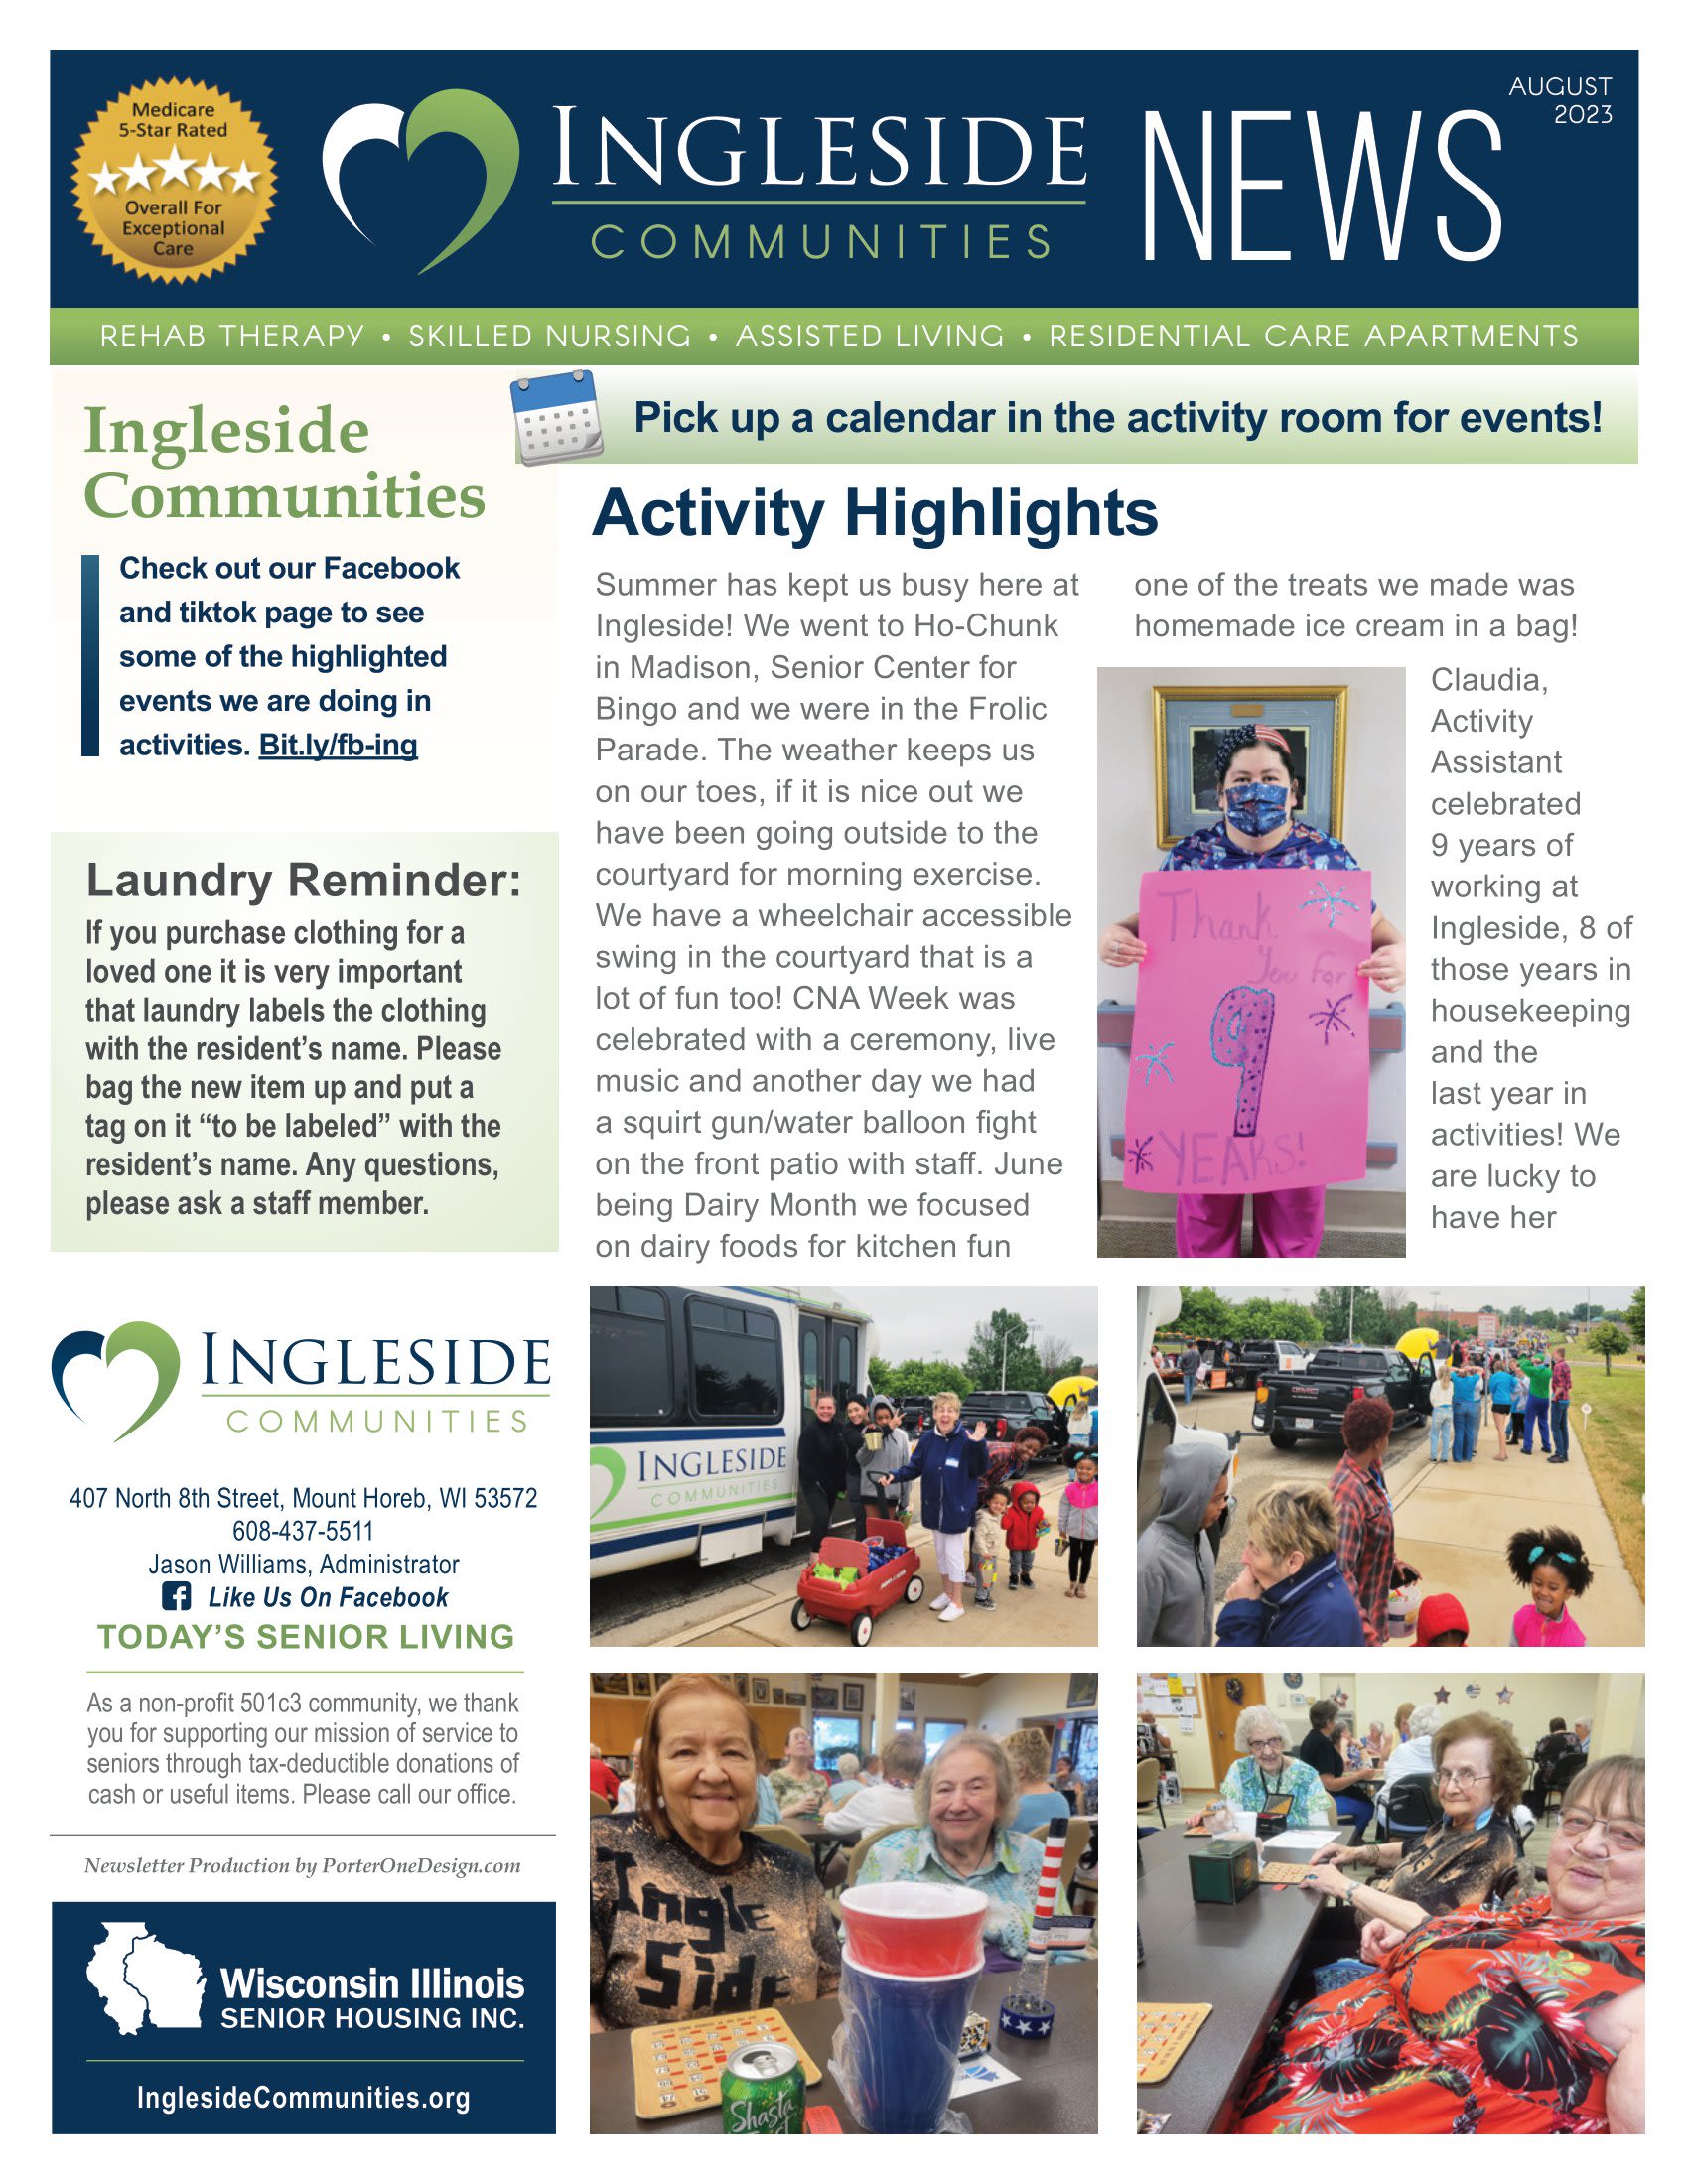 August 2023 Newsletter at Ingleside Communities in Mount Horeb, Wisconsin